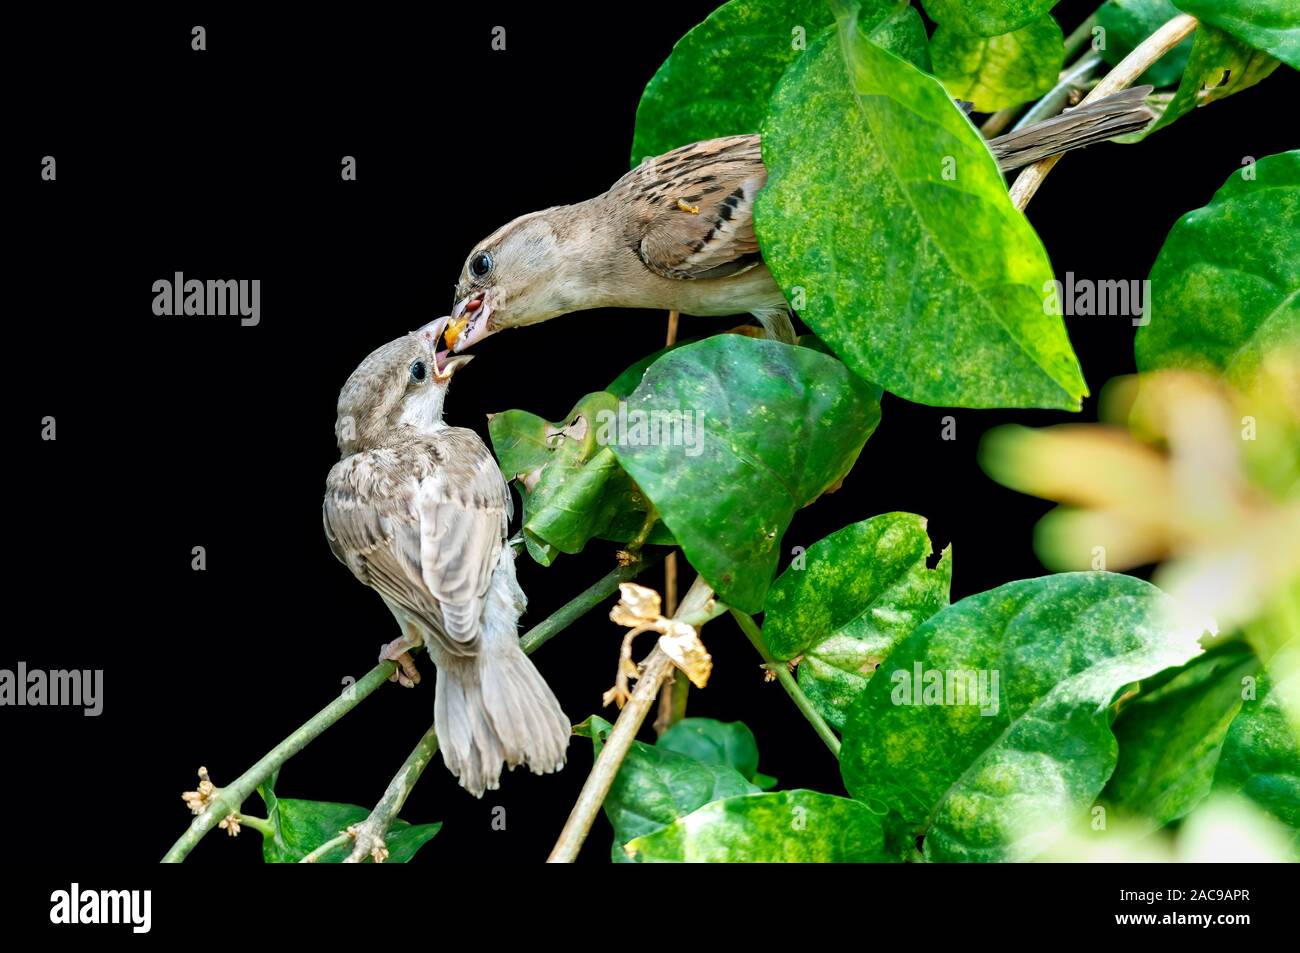 A female house sparrow feeding chick on a plant Stock Photo